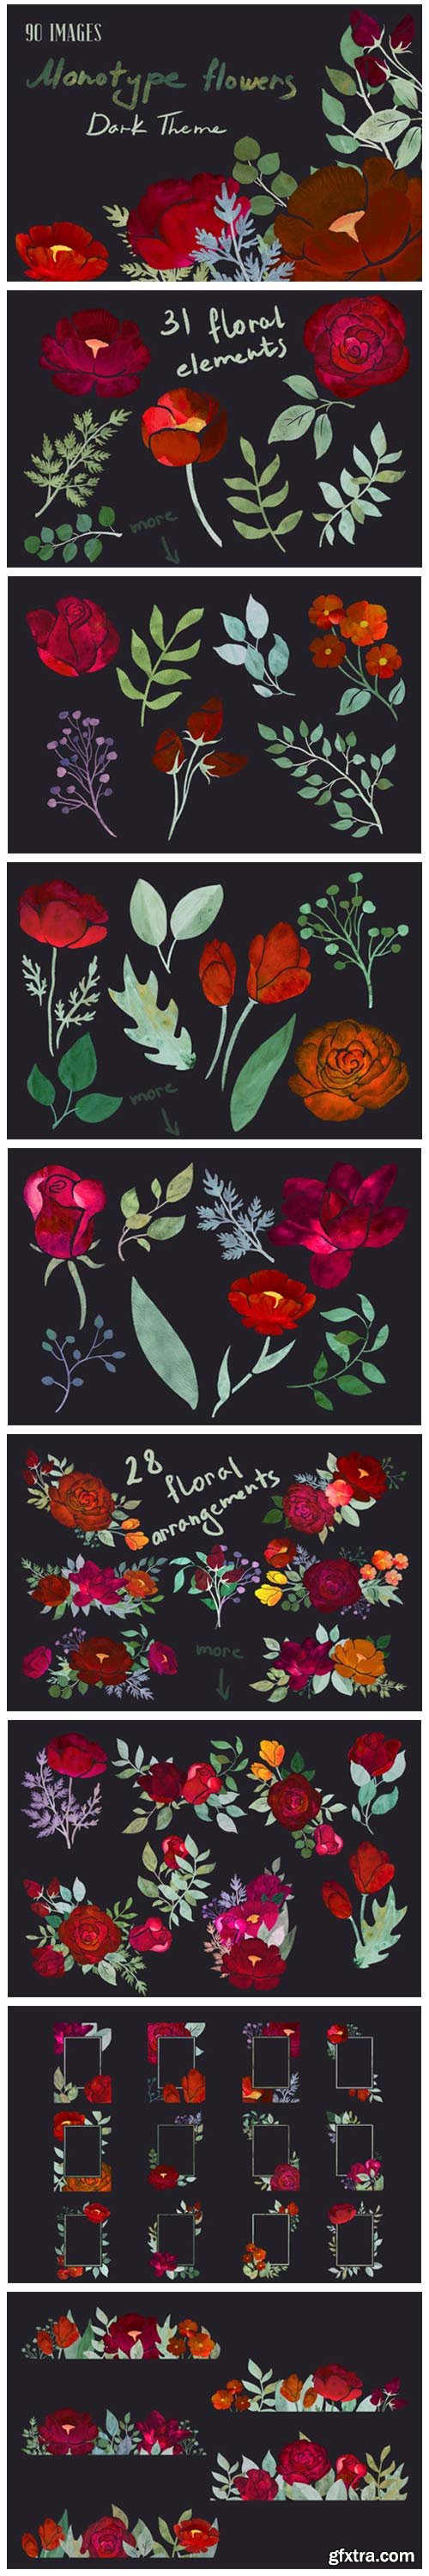 Dark Theme Monotype Flowers 4265236